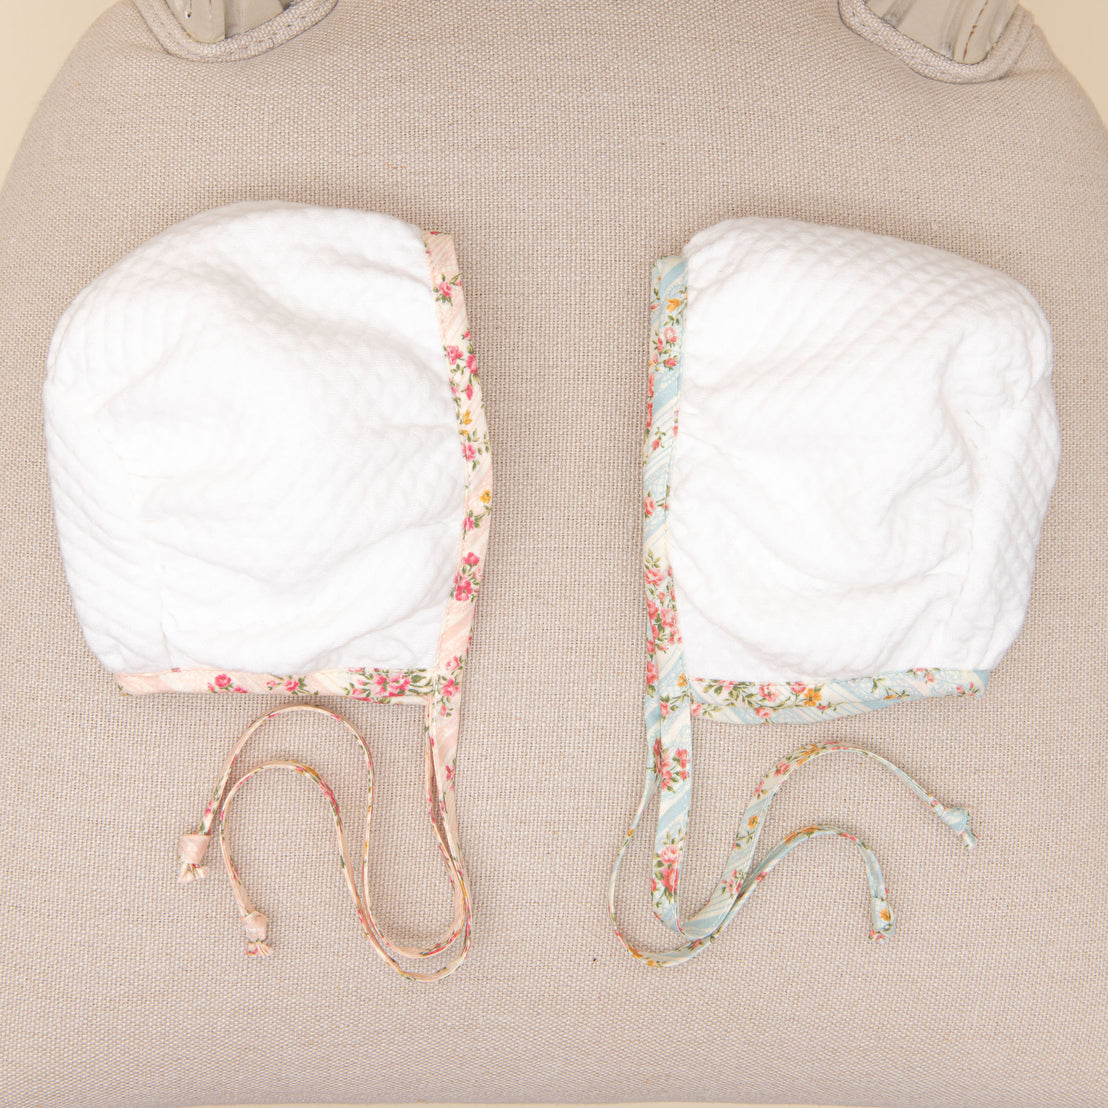 Eloise Newborn Gift Set - Save 10%